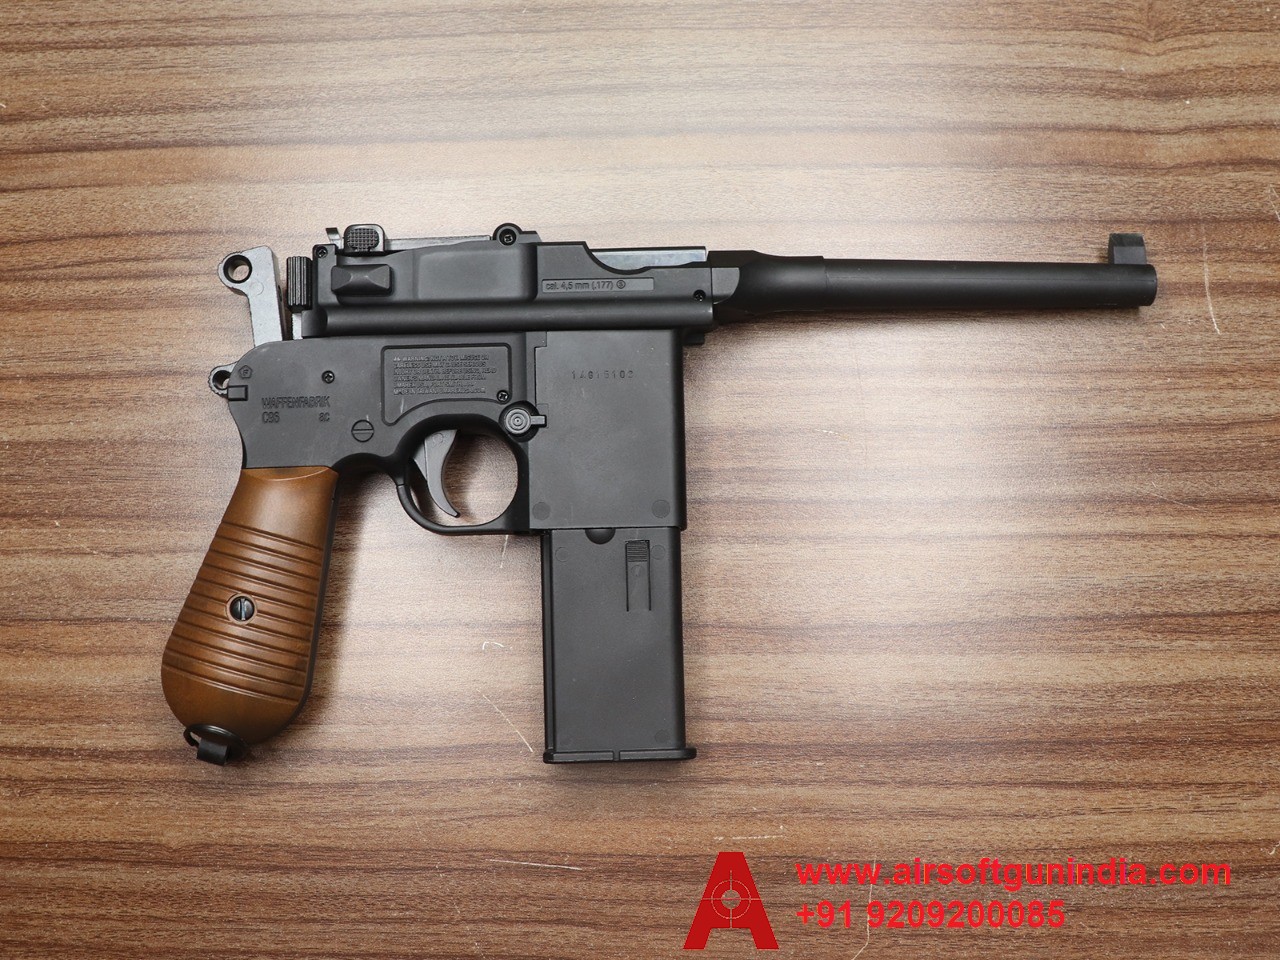 Legends C96 Co2 Blowback BB Pistol By Airsoft Gun India 